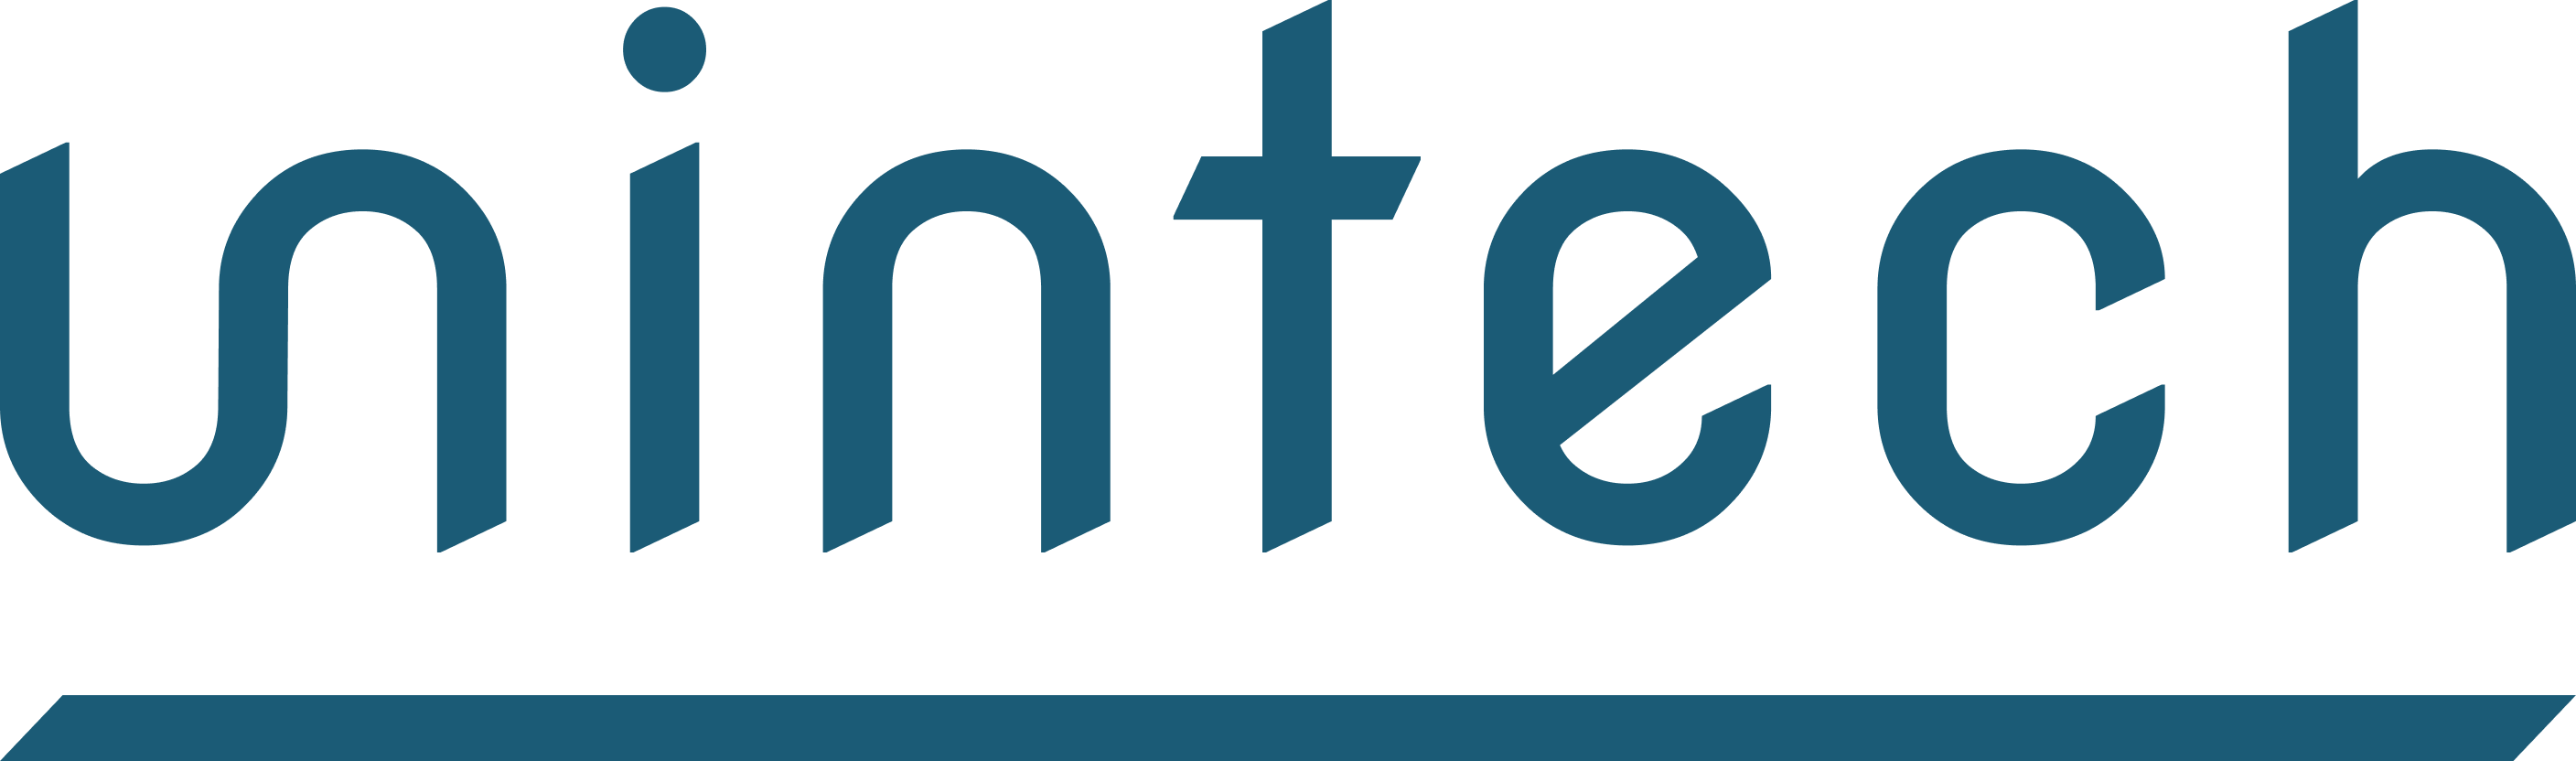 Unintech GmbH logo